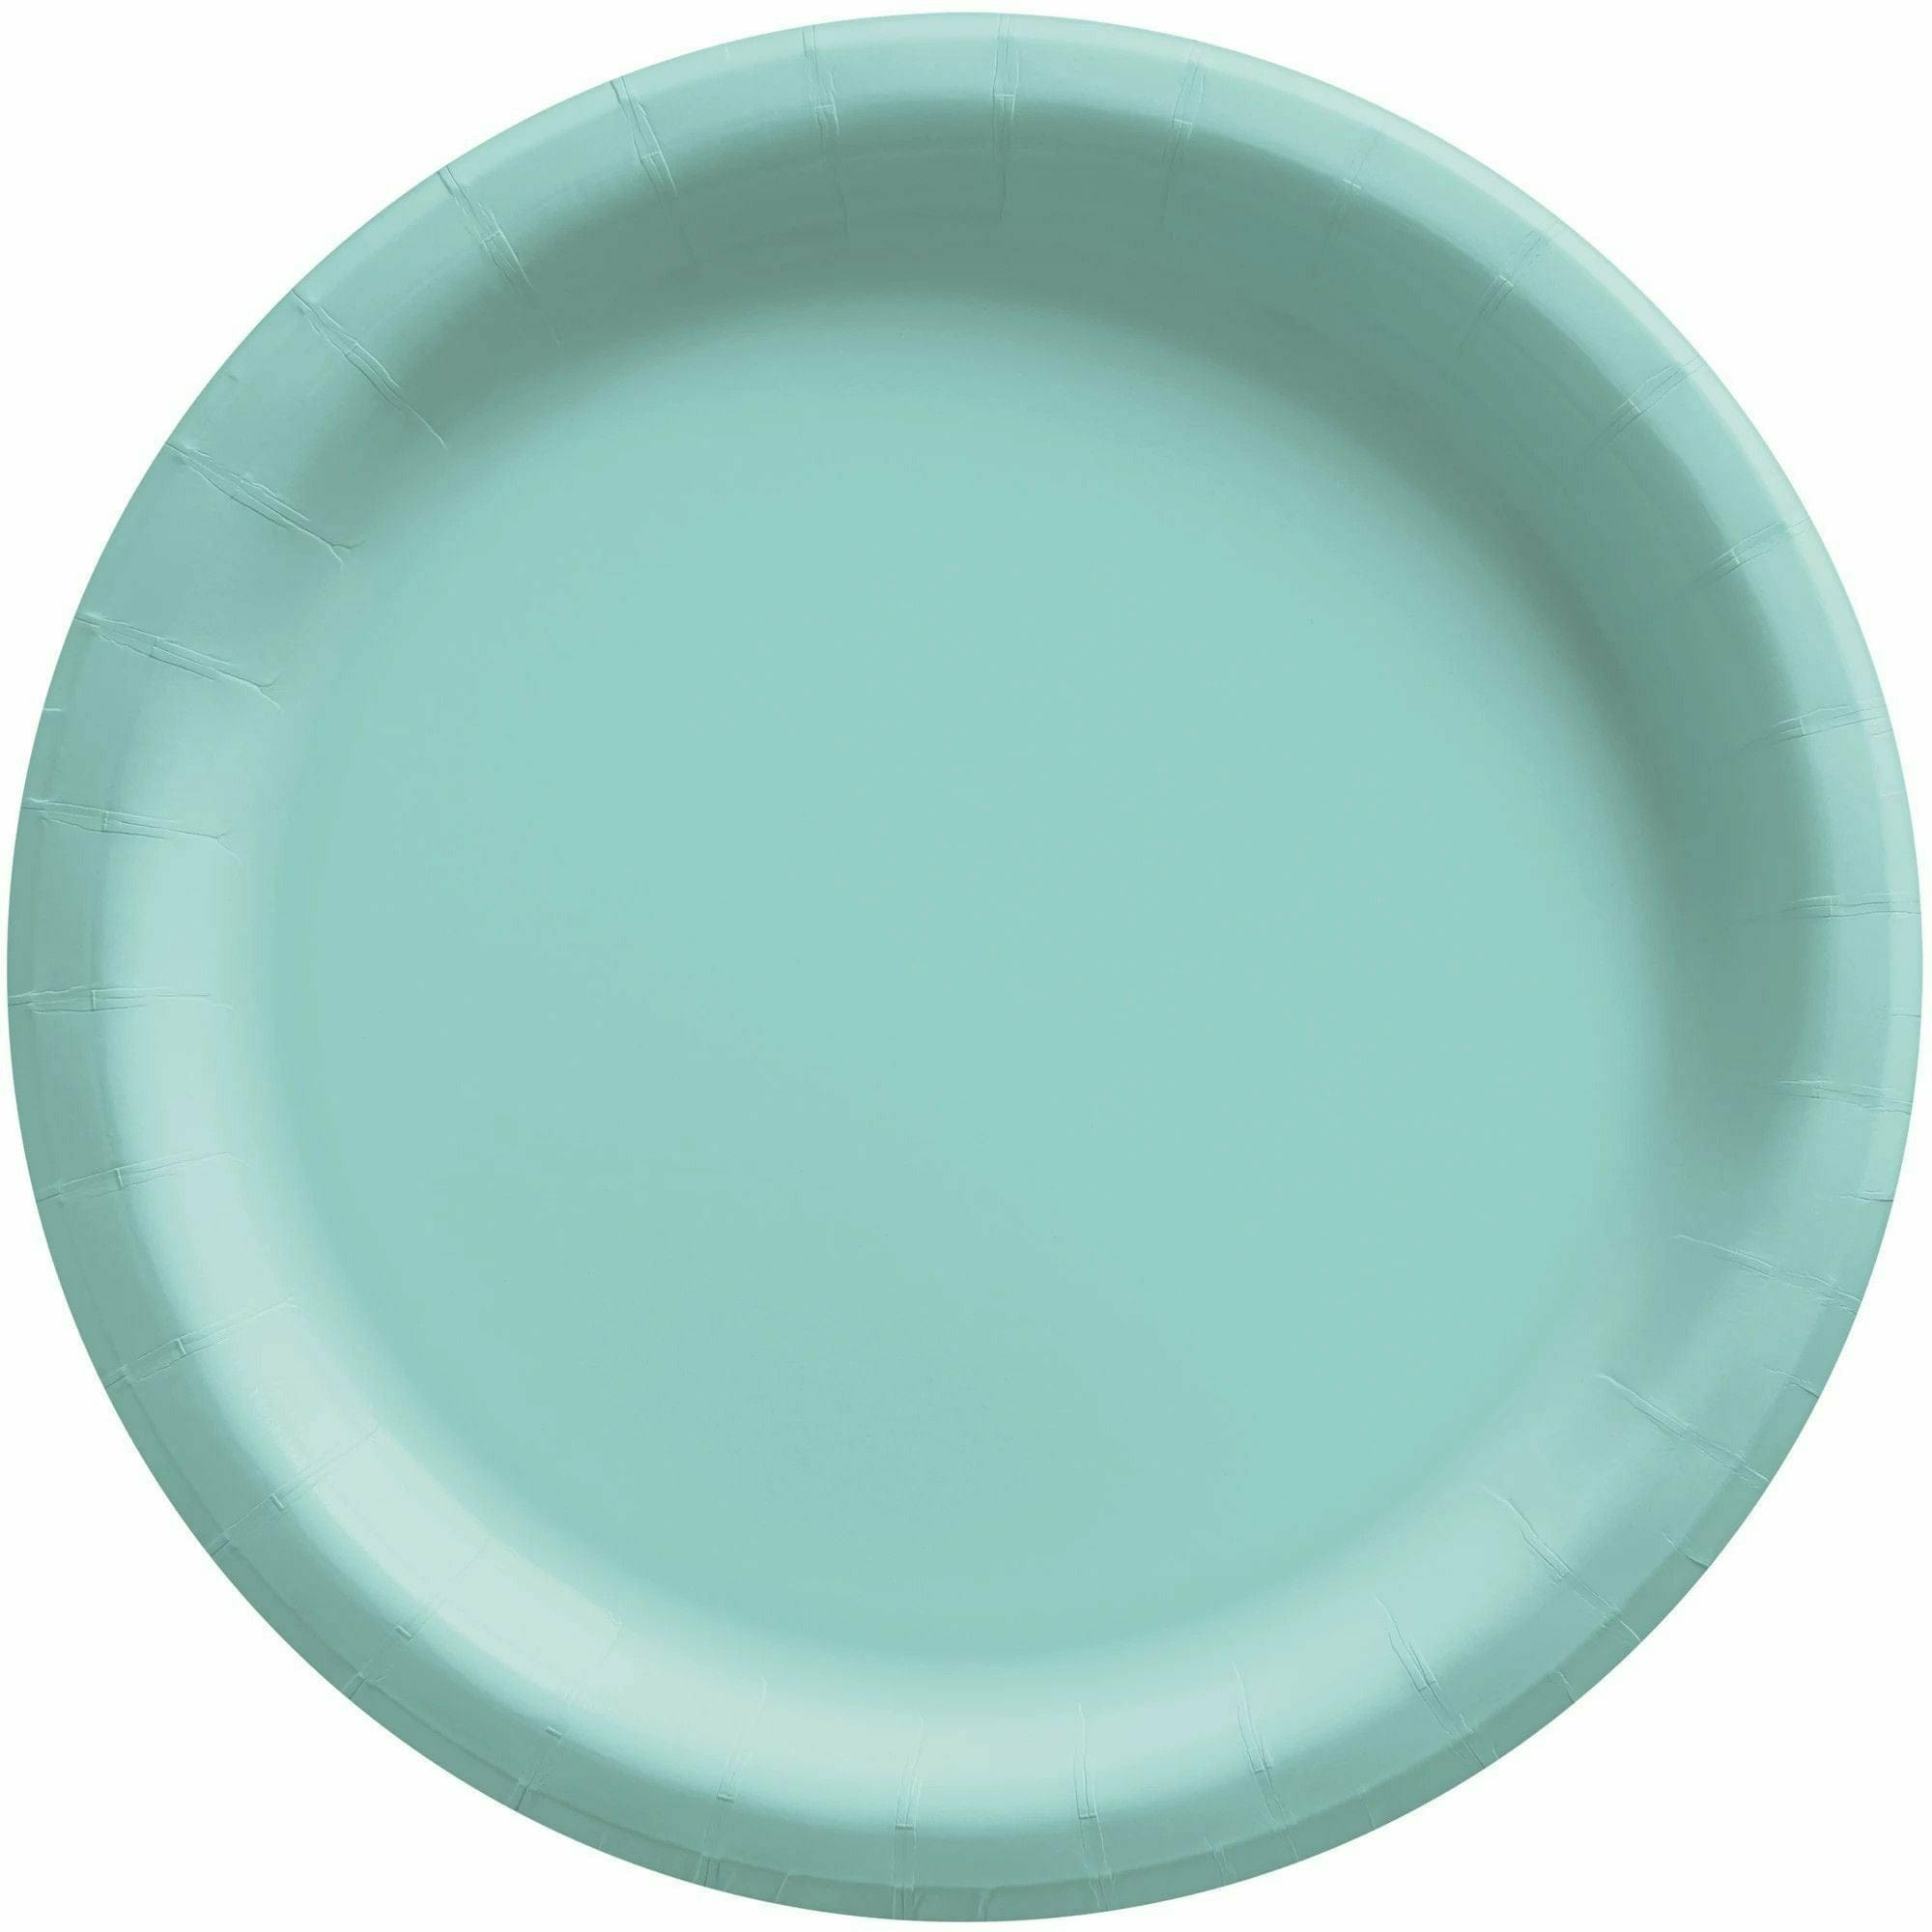 Amscan BASIC Robin's Egg Blue - 8 1/2" Round Paper Plates, 20 Ct.